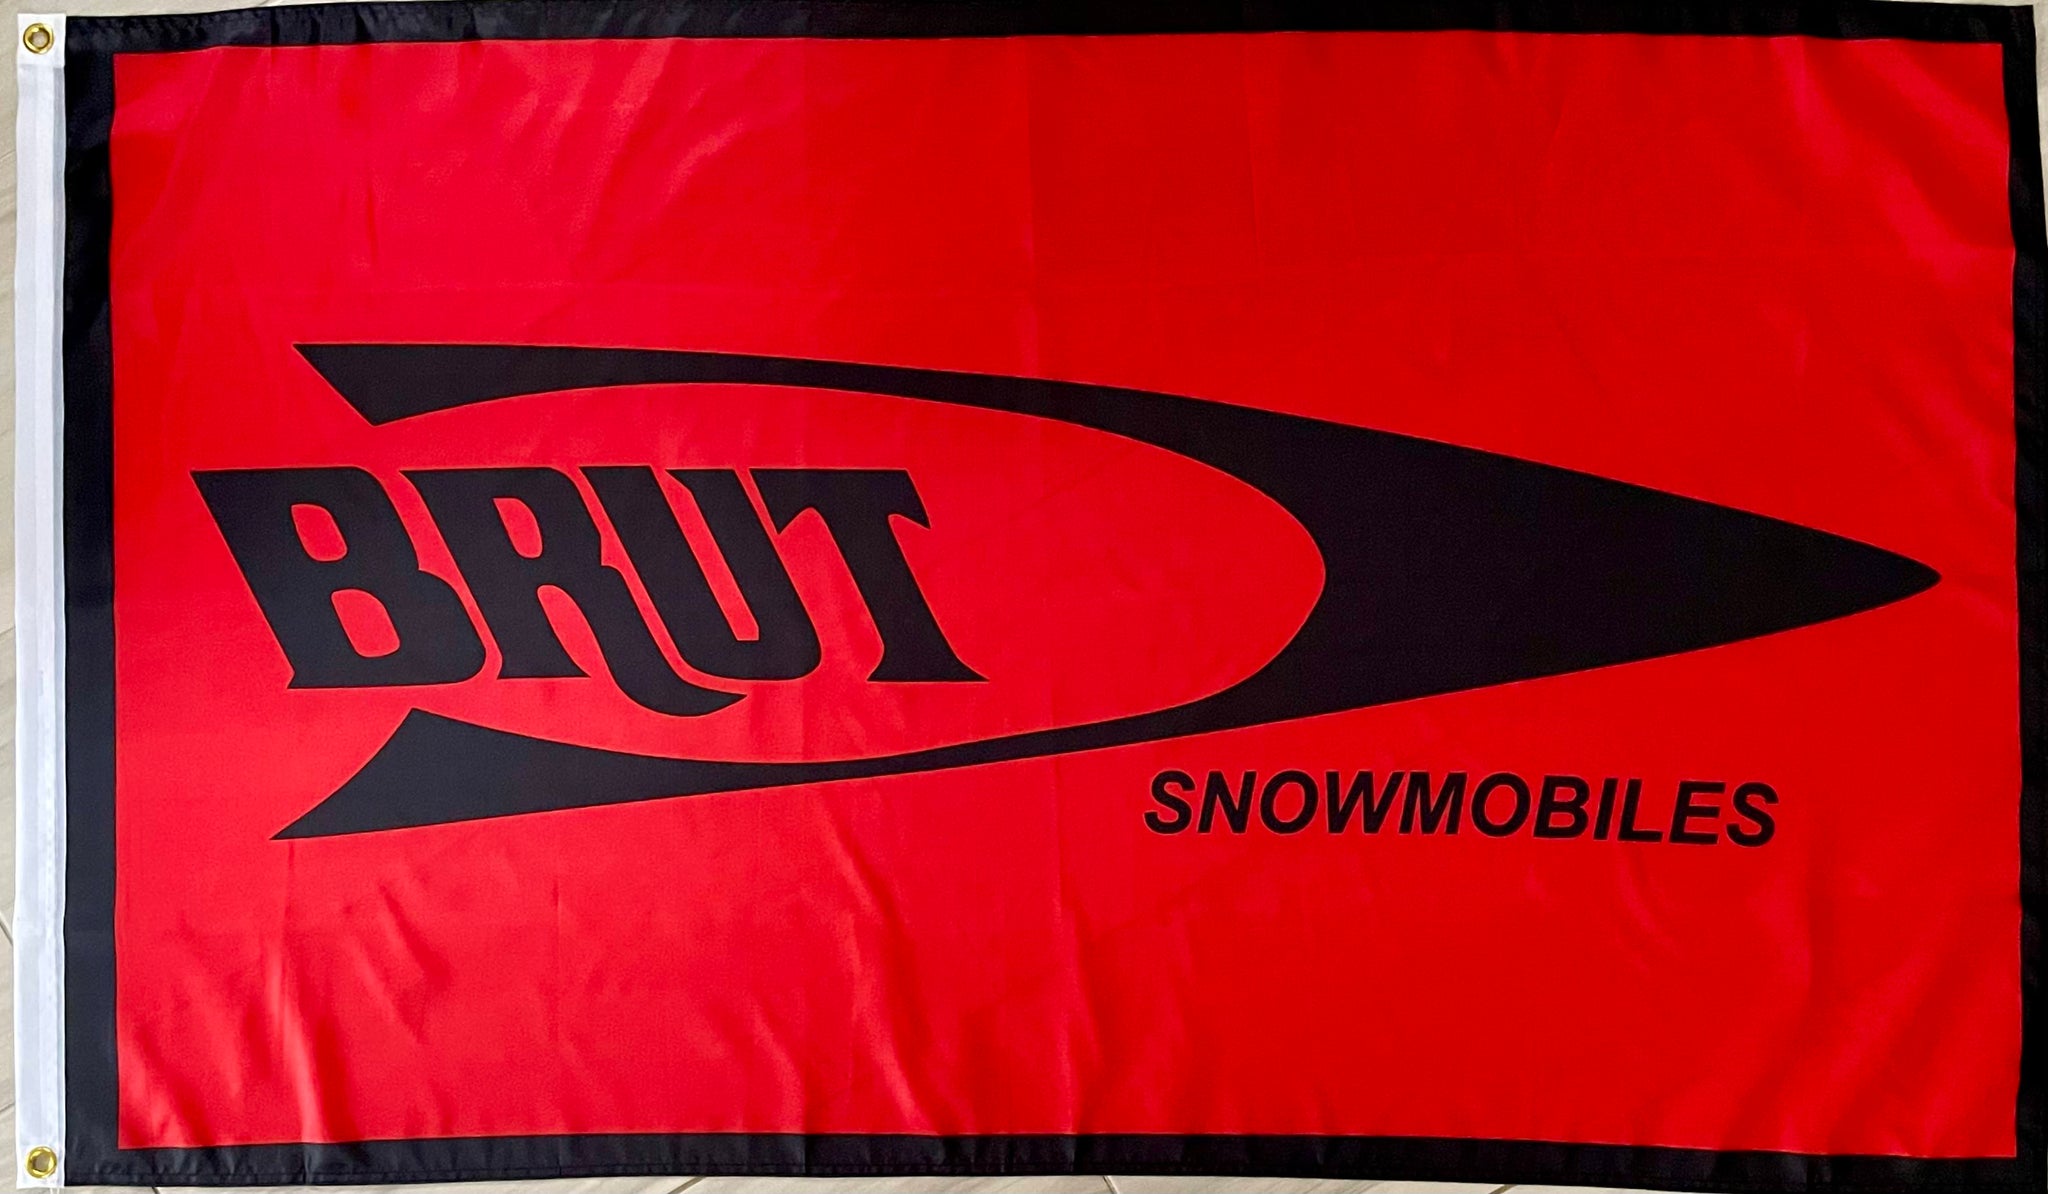 BRUT SNOWMOBILES 3x5ft FLAG BANNER MAN CAVE GARAGE